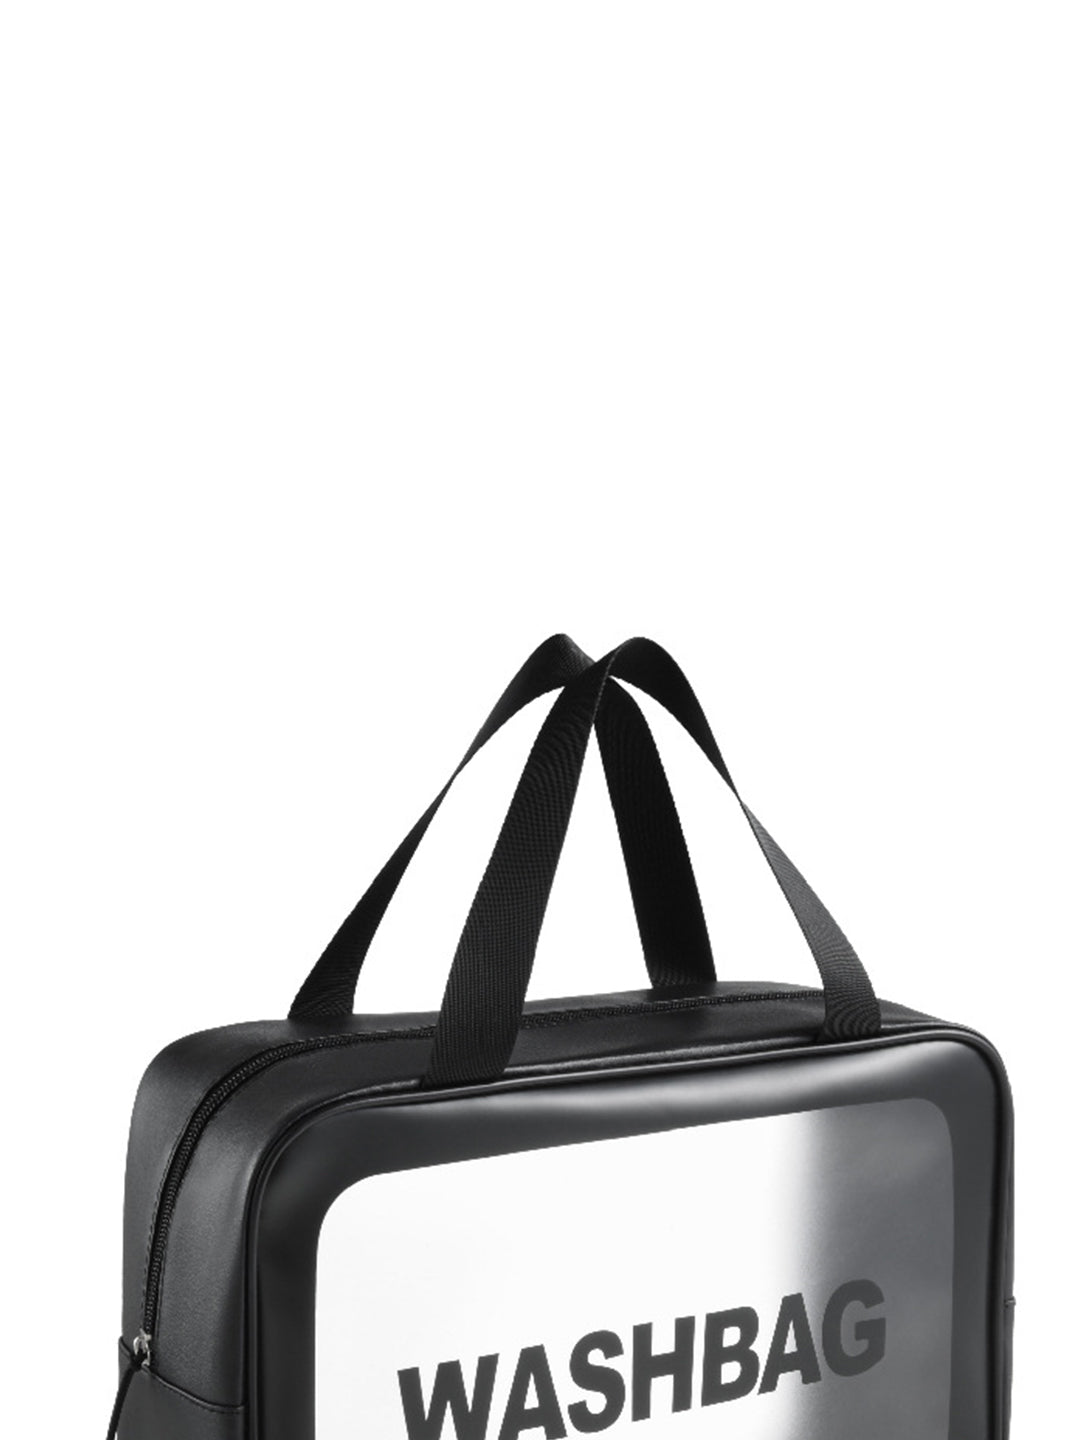 VON CASA Transparent Multicolorpurpose Travel Pouch - Black 